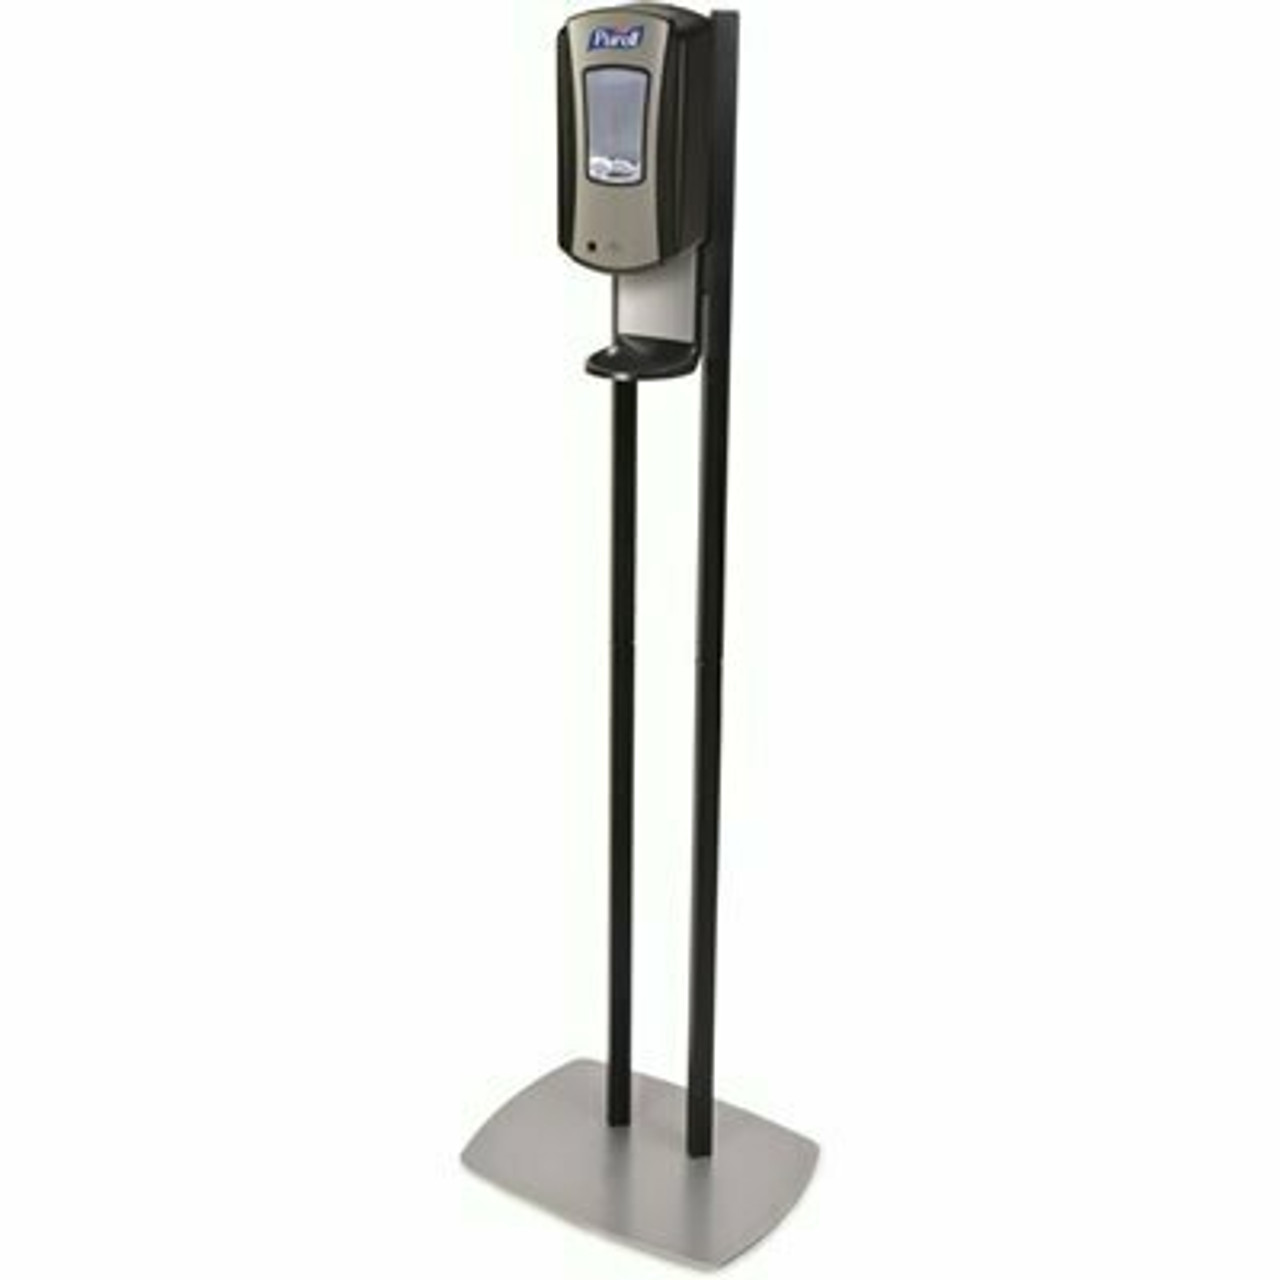 Purell Ltx-12 Dispenser Floor Stand For Touch Free Dispenser